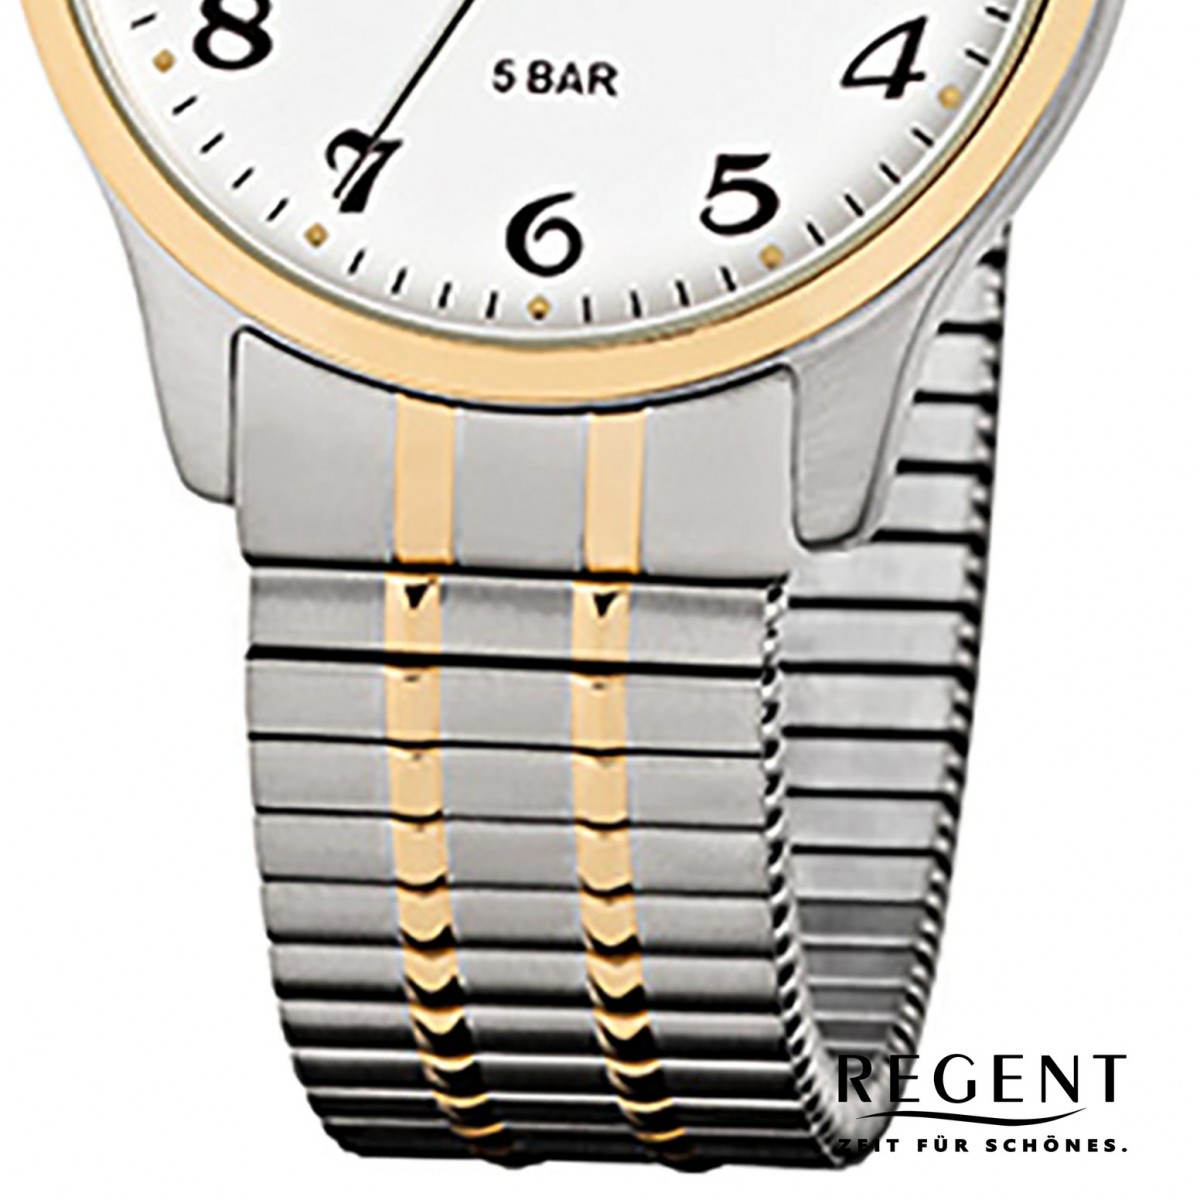 Regent Stahl-Armband Quarz-Uhr silber URF877 Herren-Armbanduhr gold F-877